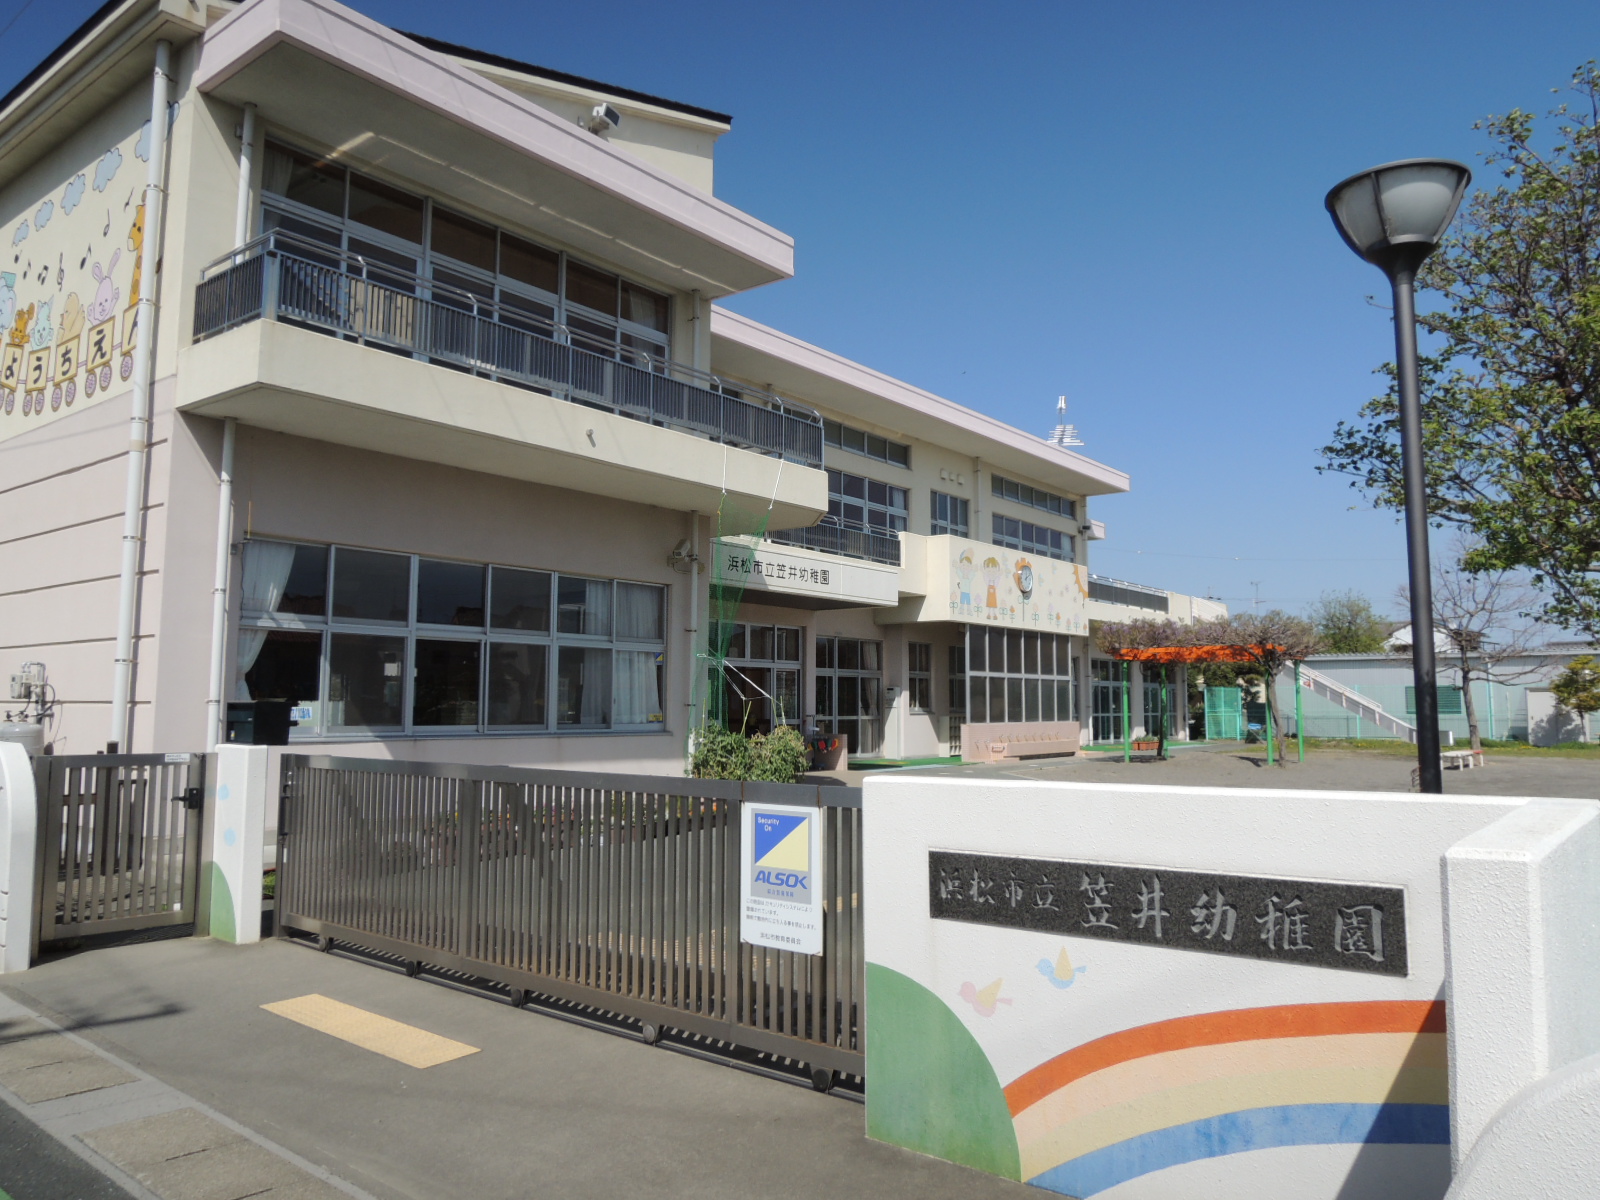 kindergarten ・ Nursery. Hamamatsu City Kasai kindergarten (kindergarten ・ 1152m to the nursery)